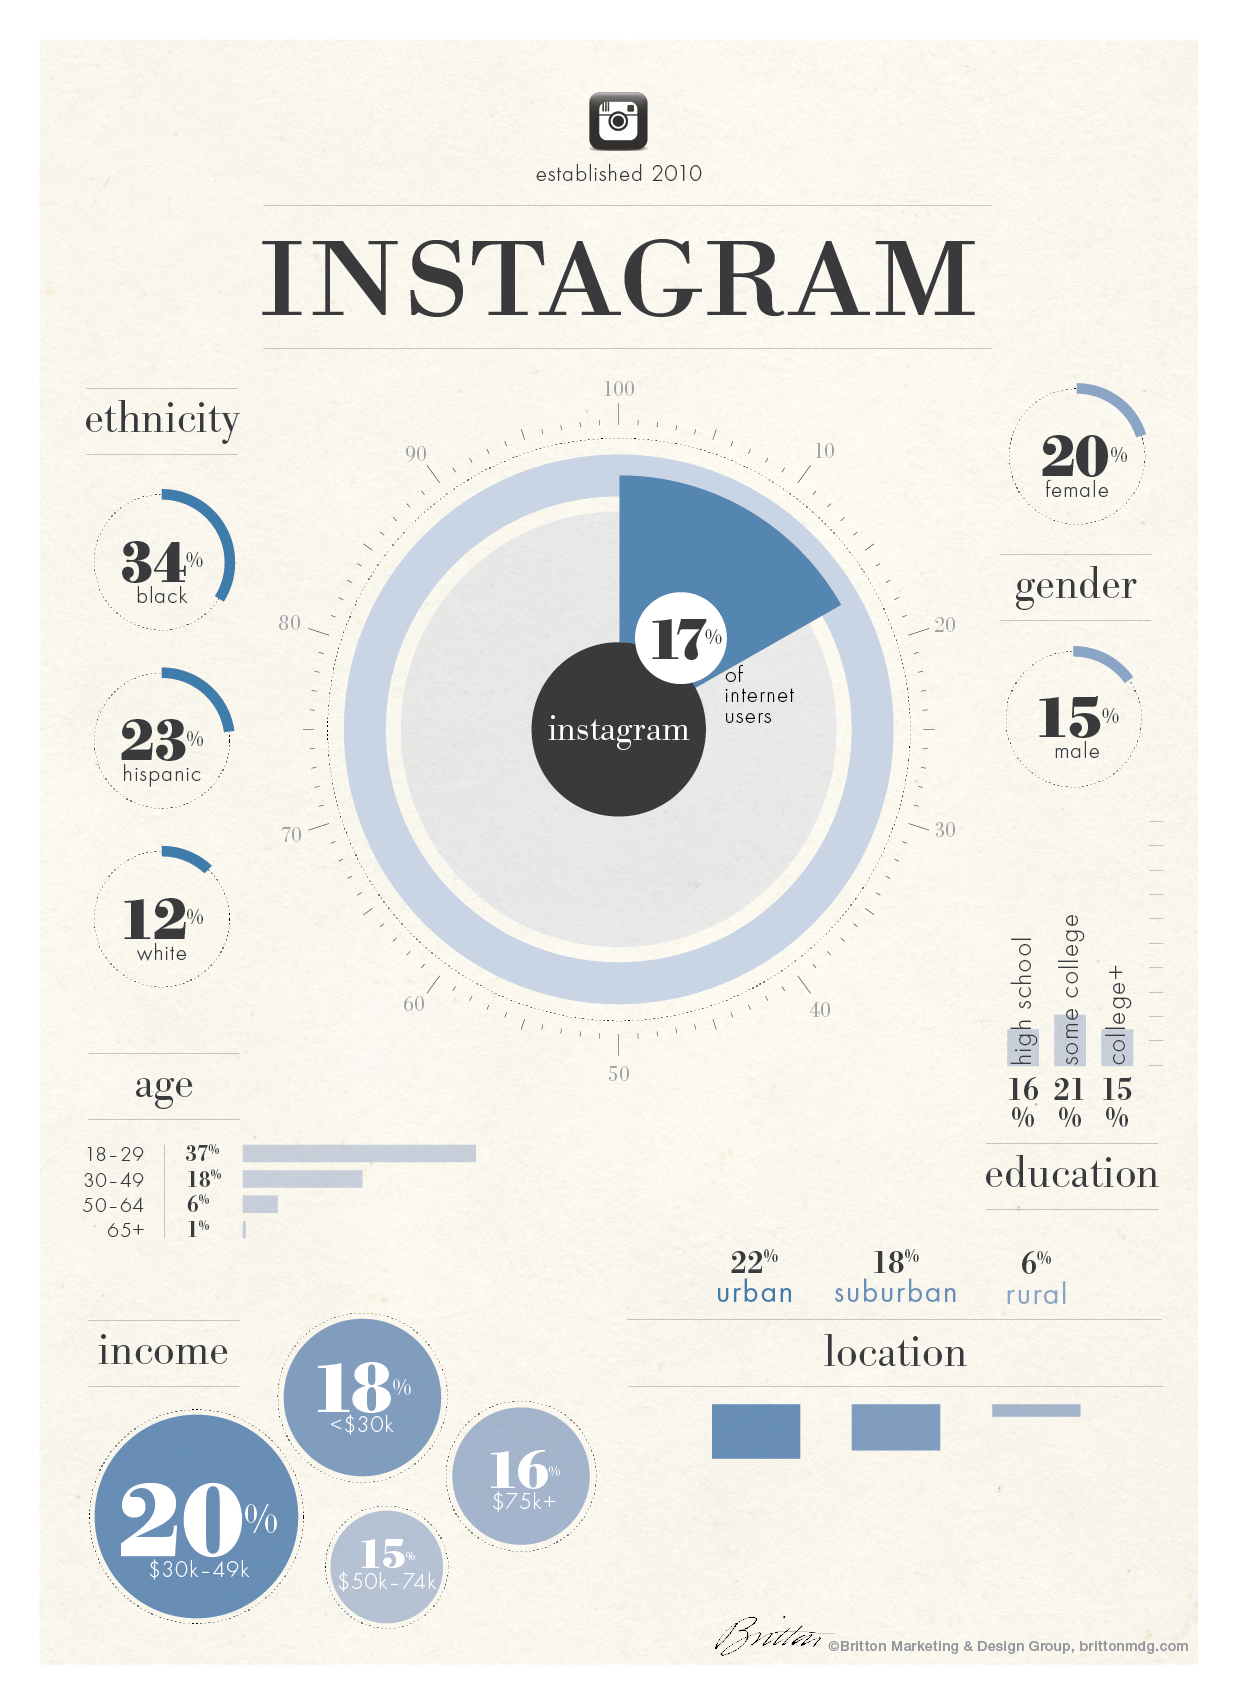 #Infographic: The demographics of Instagram users - #socialmedia